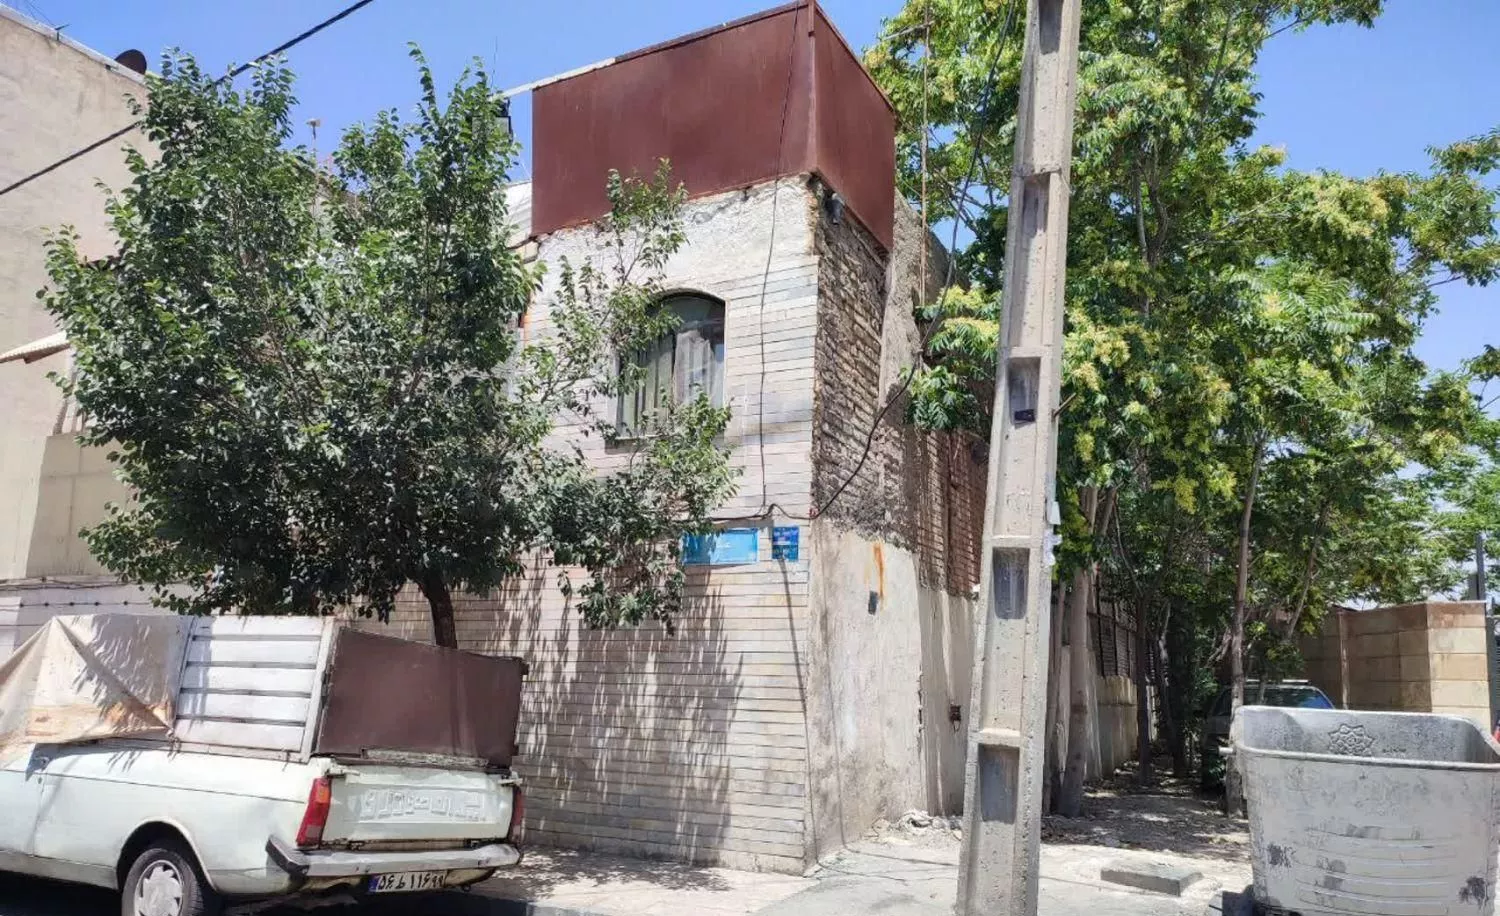 خانه ویلایی دو طبقه ونیم نبش خیابان وکوچه